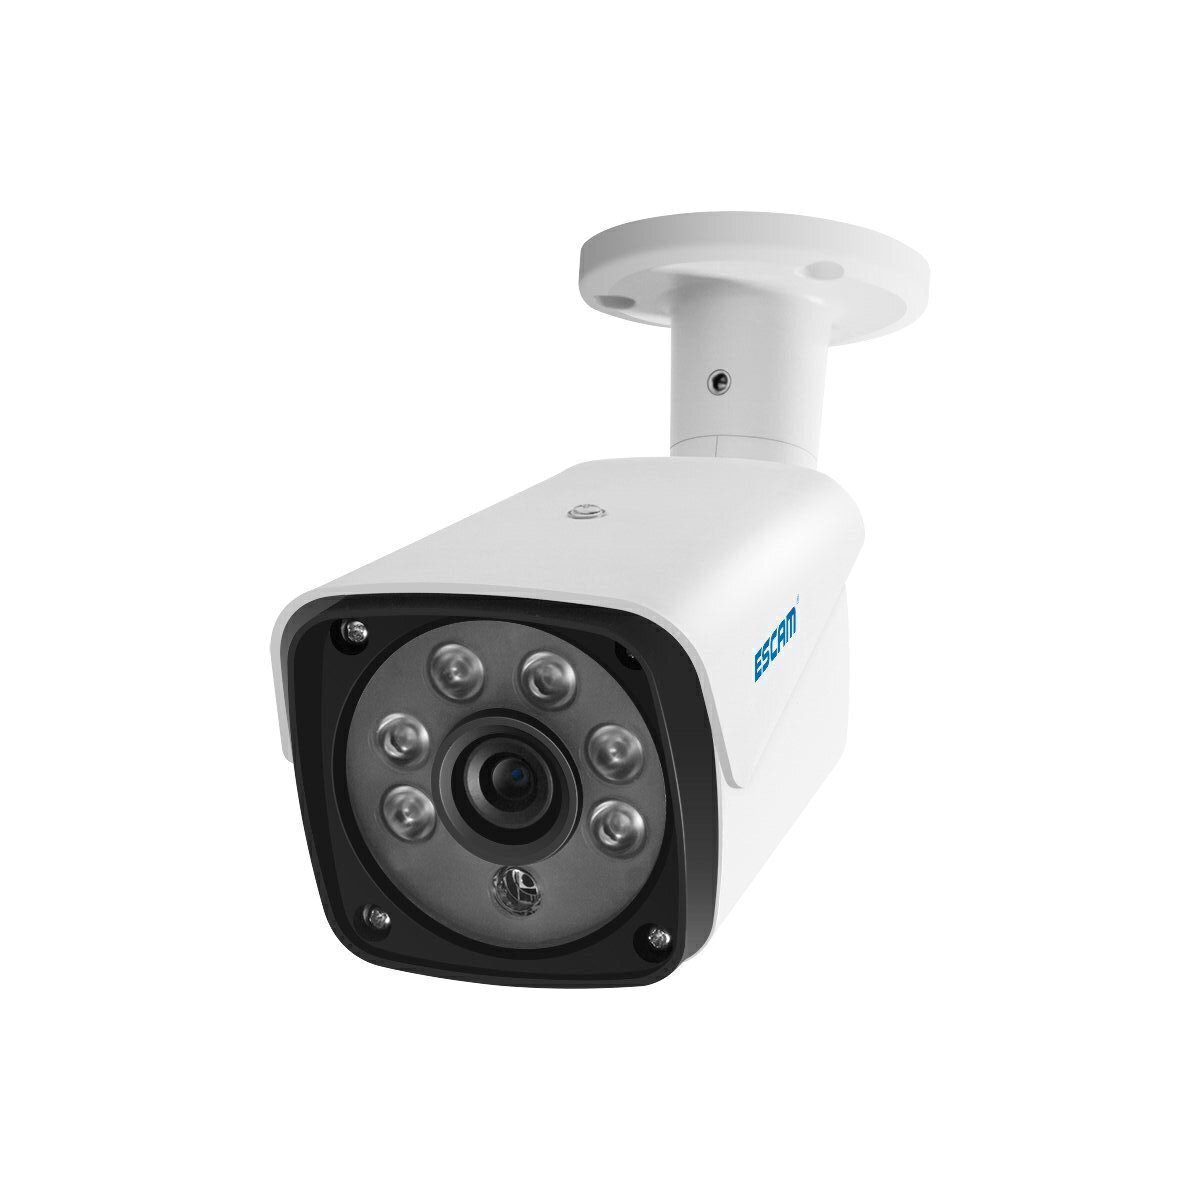 ESCAM QH002 HD 1080P IP Camera ONVIF H.265 P2P Outdoor Waterproof IR Bullet with Smart Analysis Function Surveillance Security Camera 79